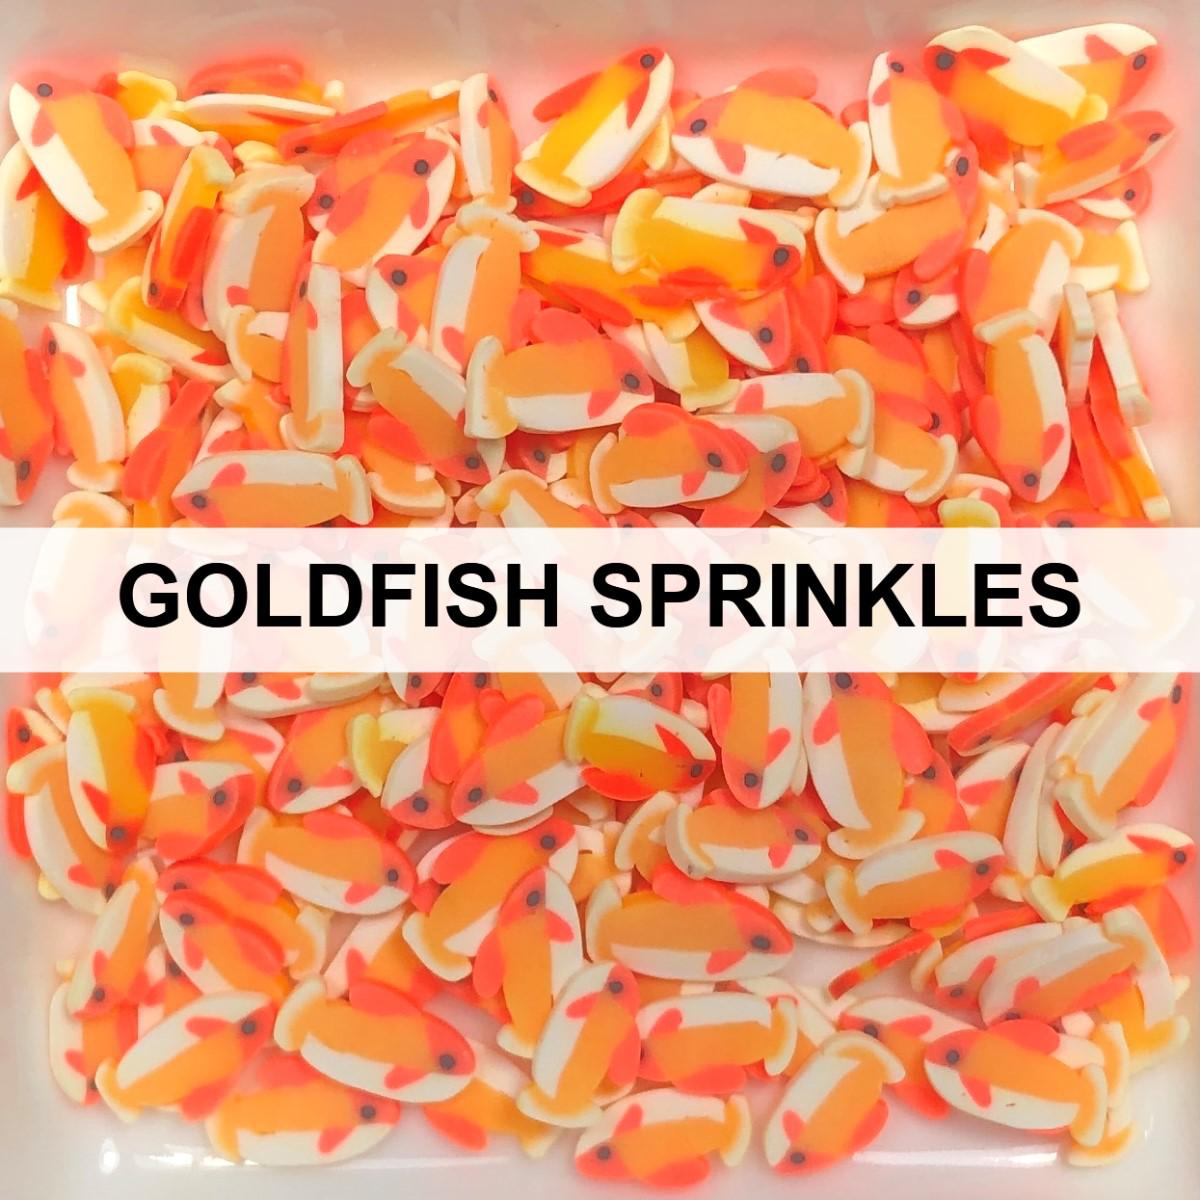 Goldfish Sprinkles